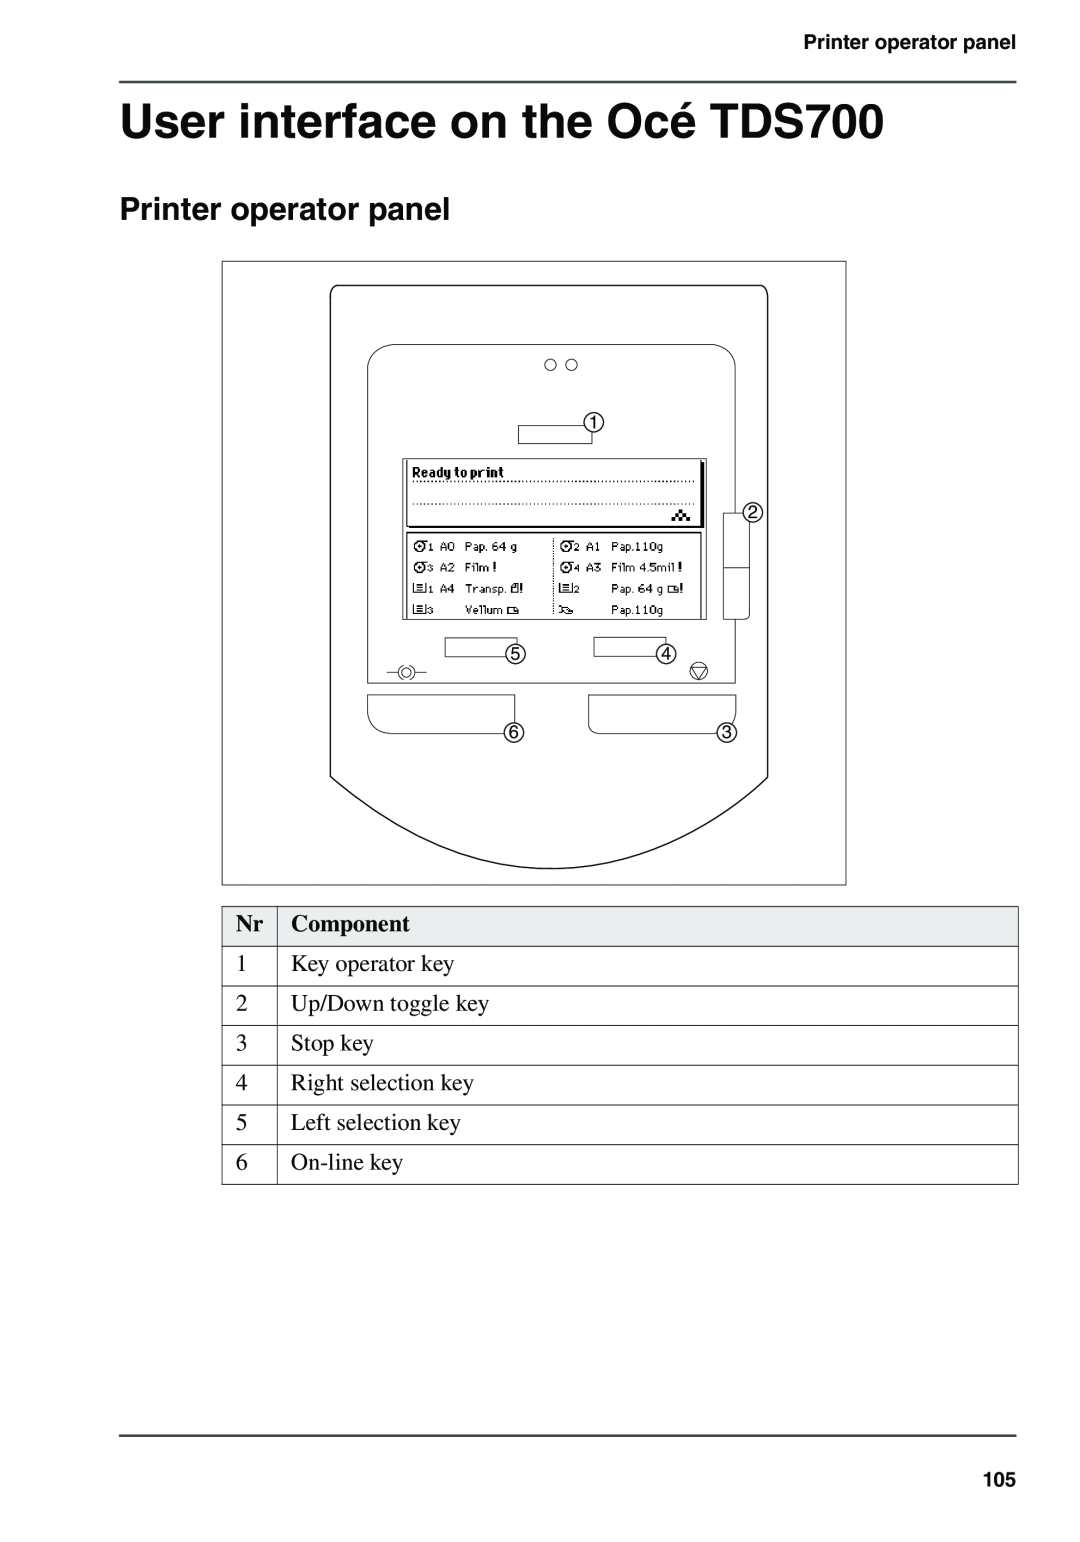 Oce North America user manual User interface on the Océ TDS700, Printer operator panel, Nr Component 